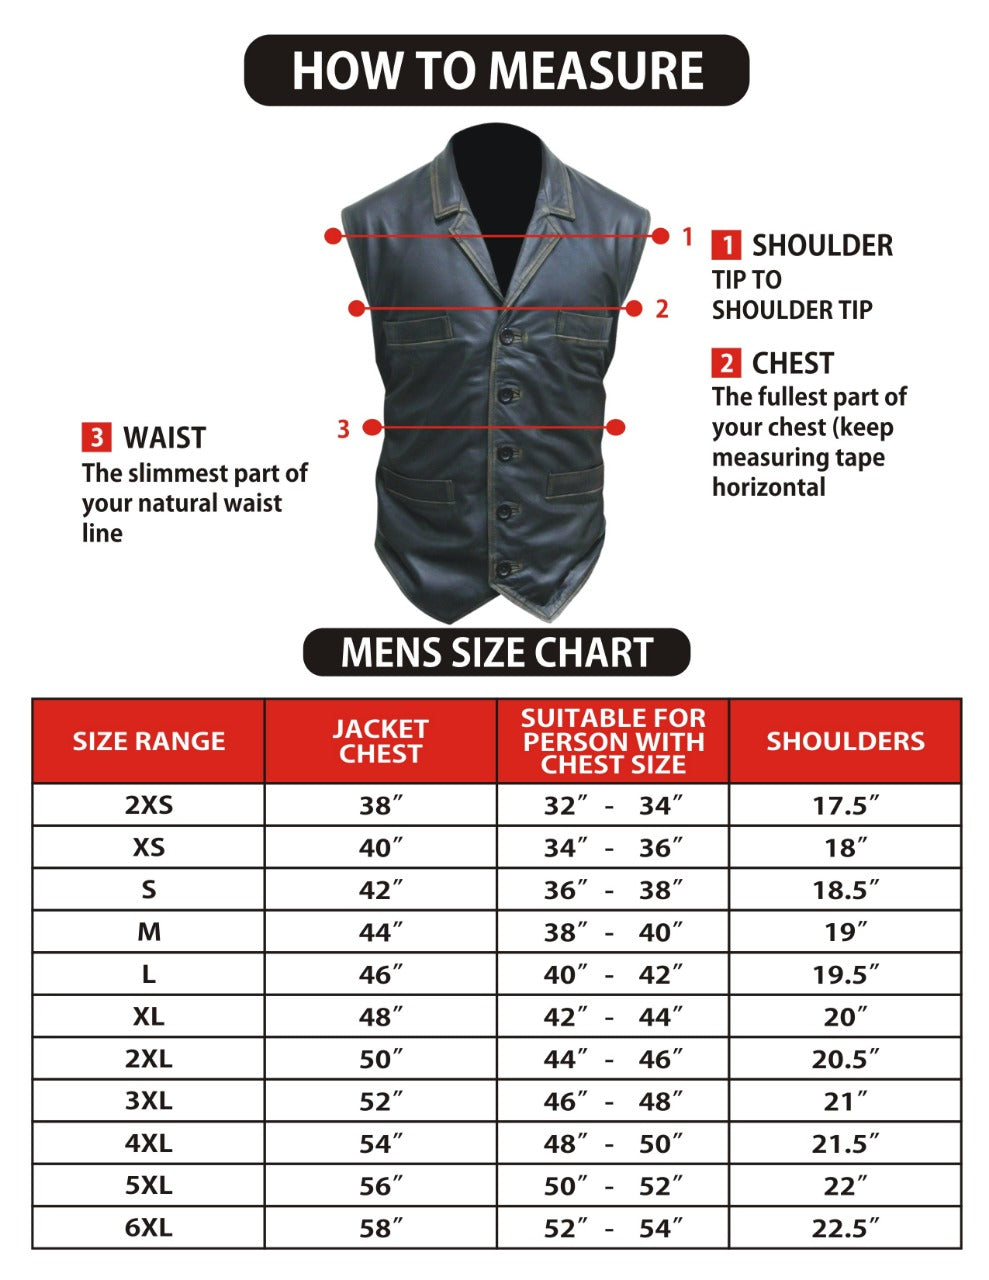 Spine Spark Men's Motorbike Soft Leather Tan Classic Style Vest